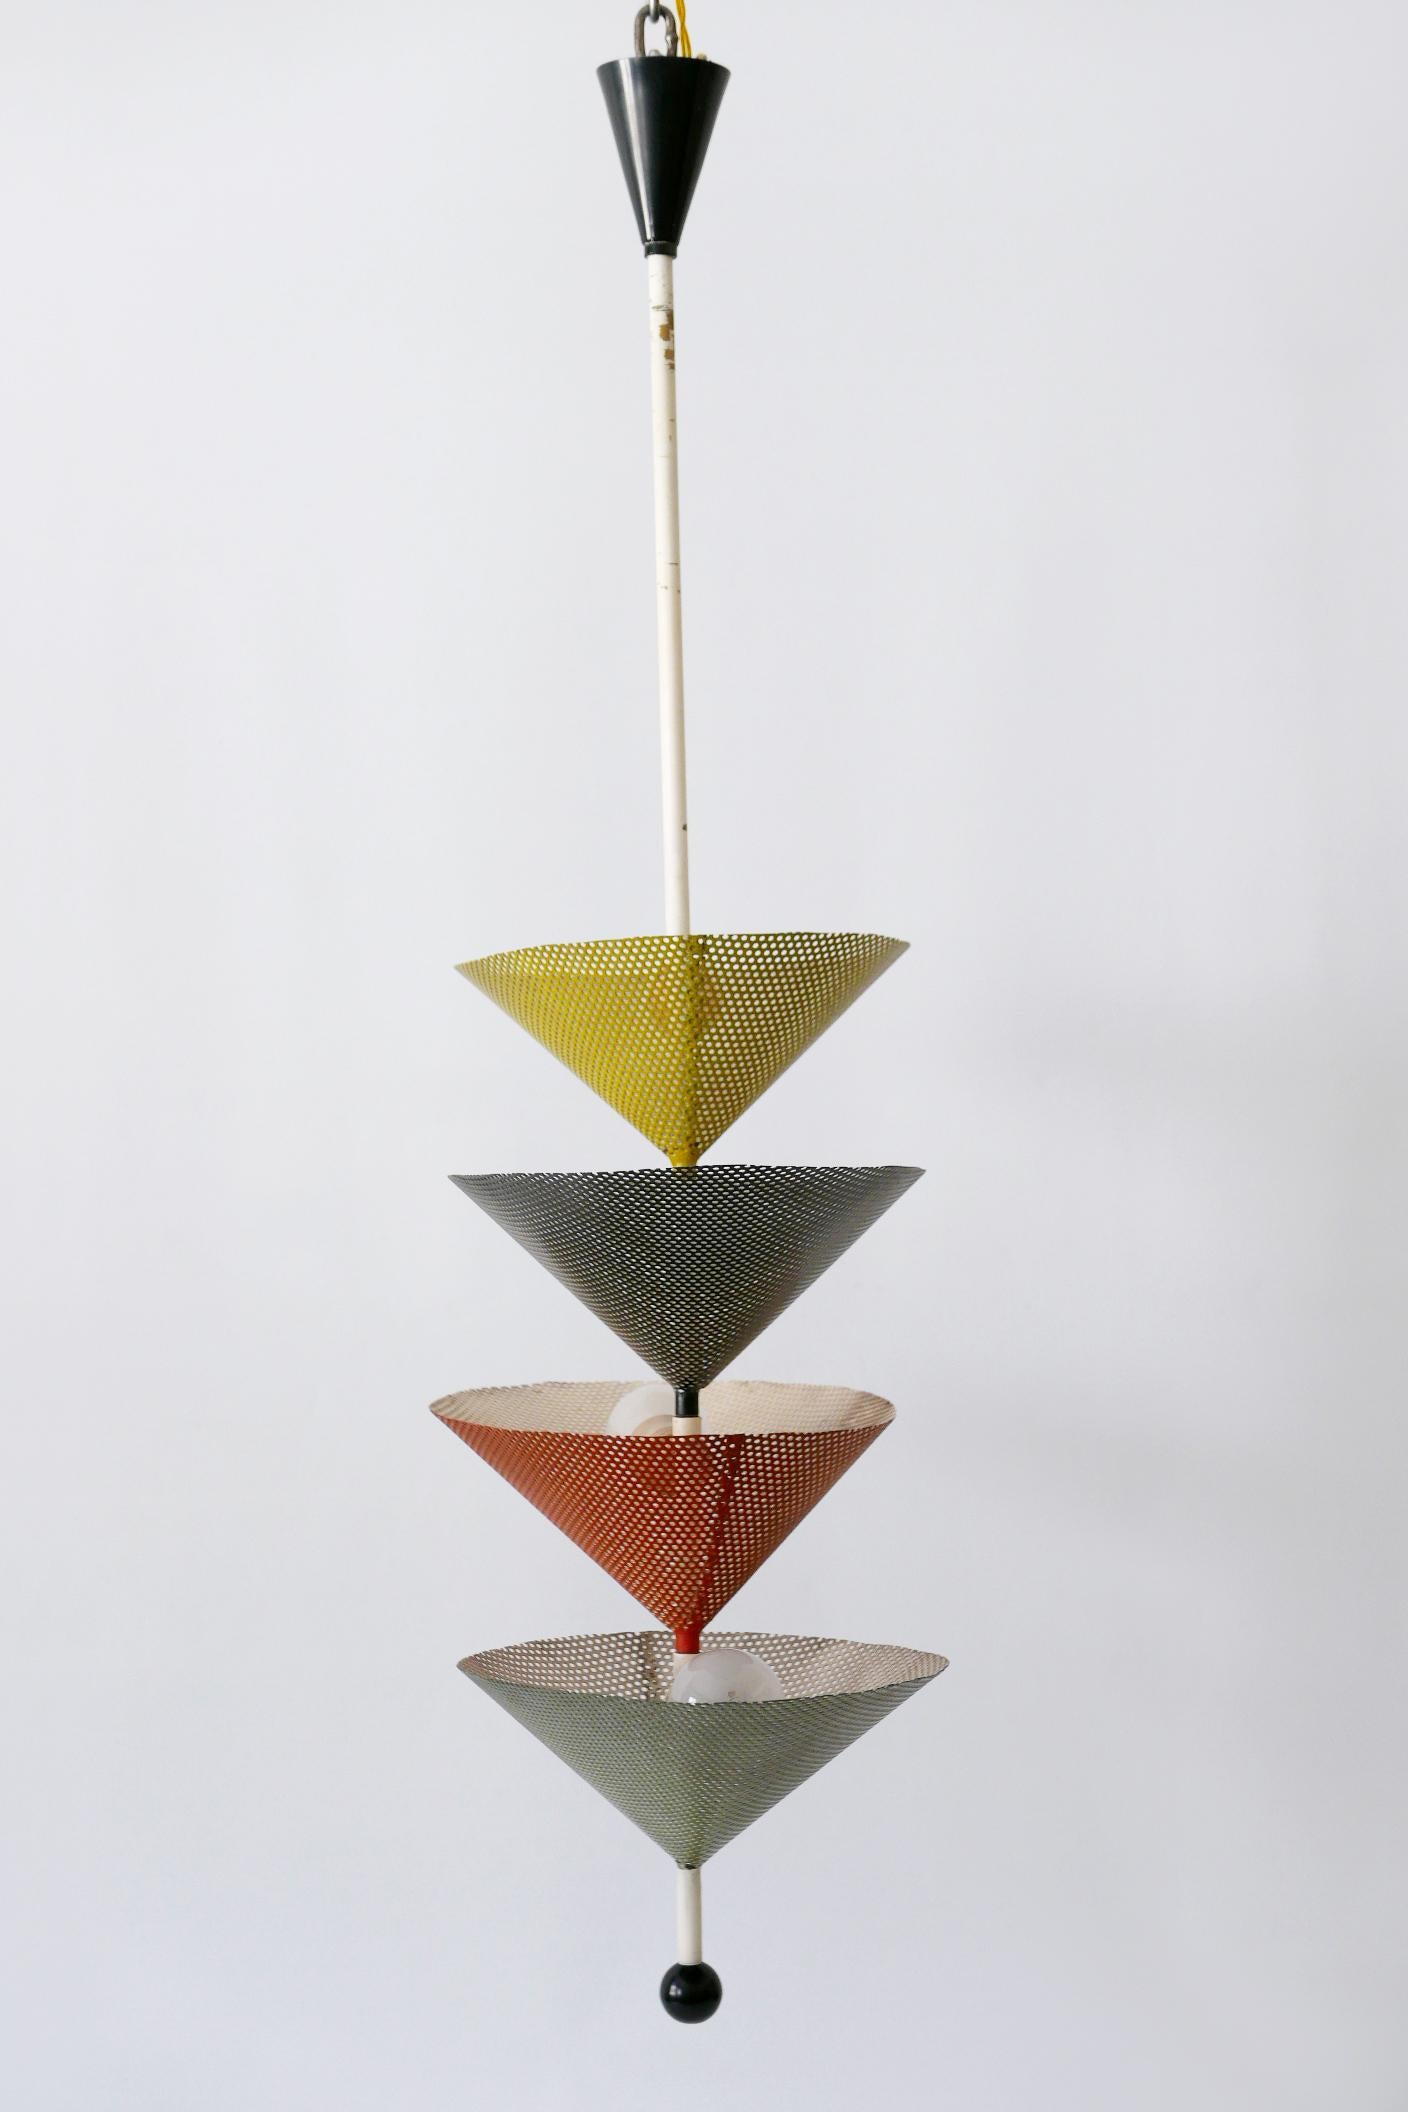 Rare Mid-Century Modern Chandelier or Pendant Lamp by Mathieu Matégot 1950s For Sale 4